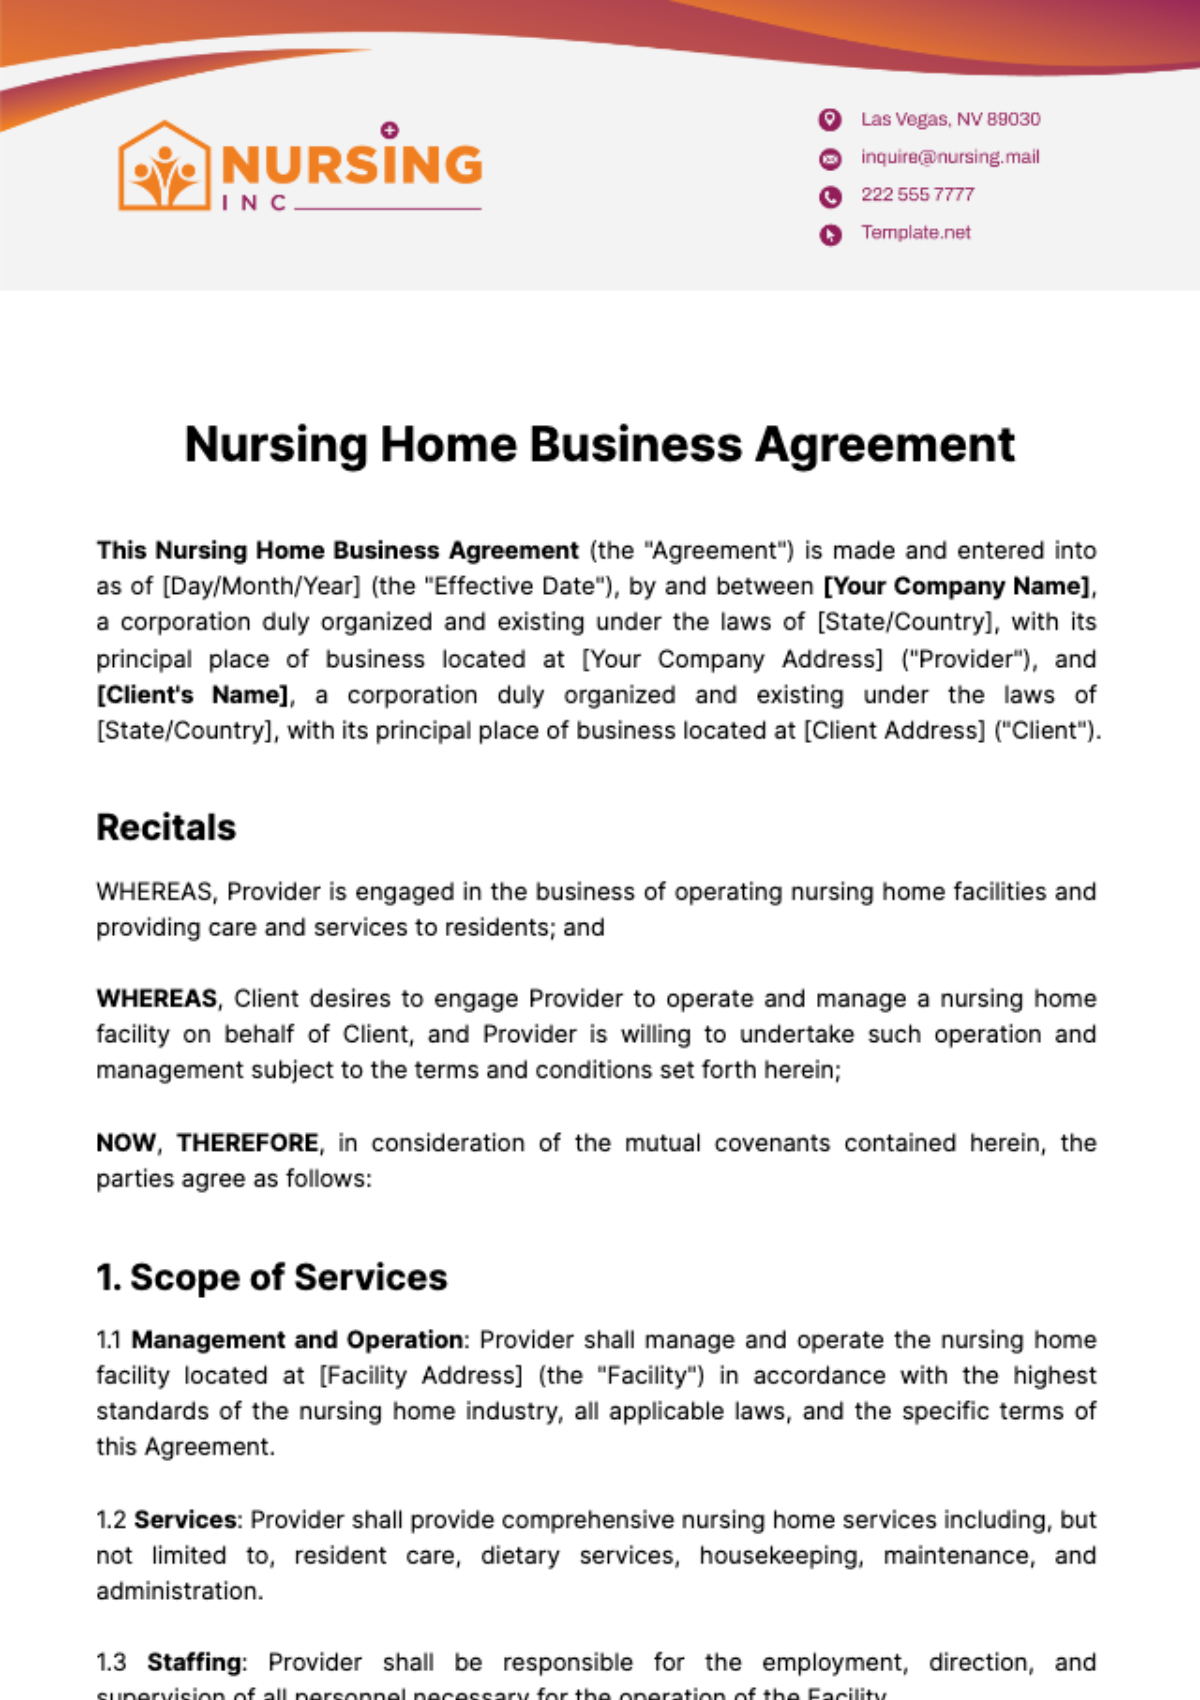 Nursing Home Business Agreement Template